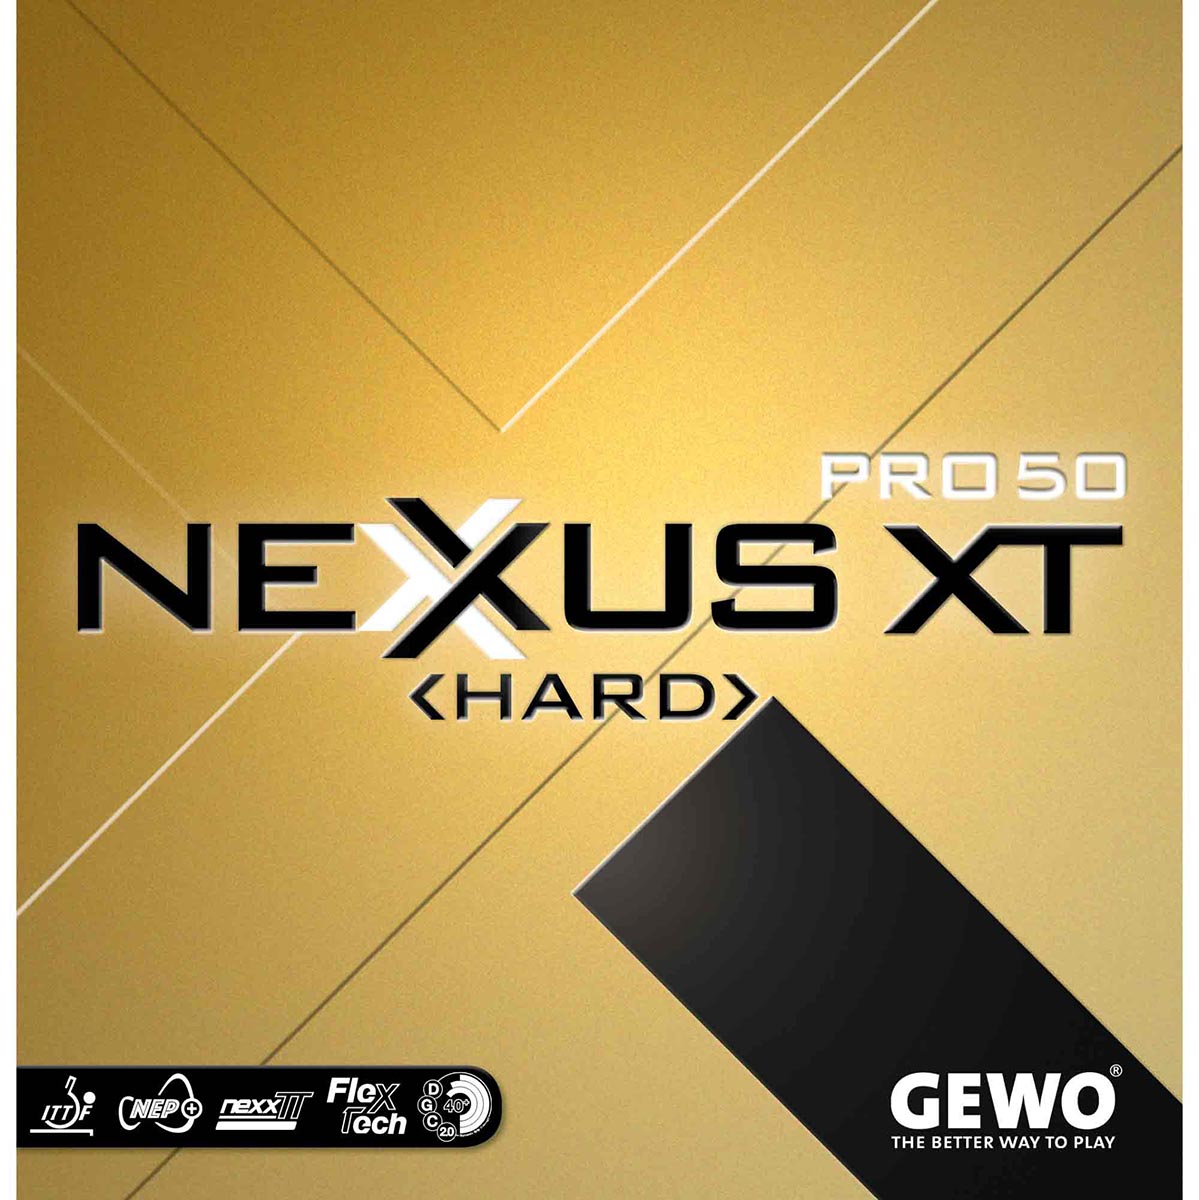 Gewo Nexxus XT Pro 50 Hard Rubber